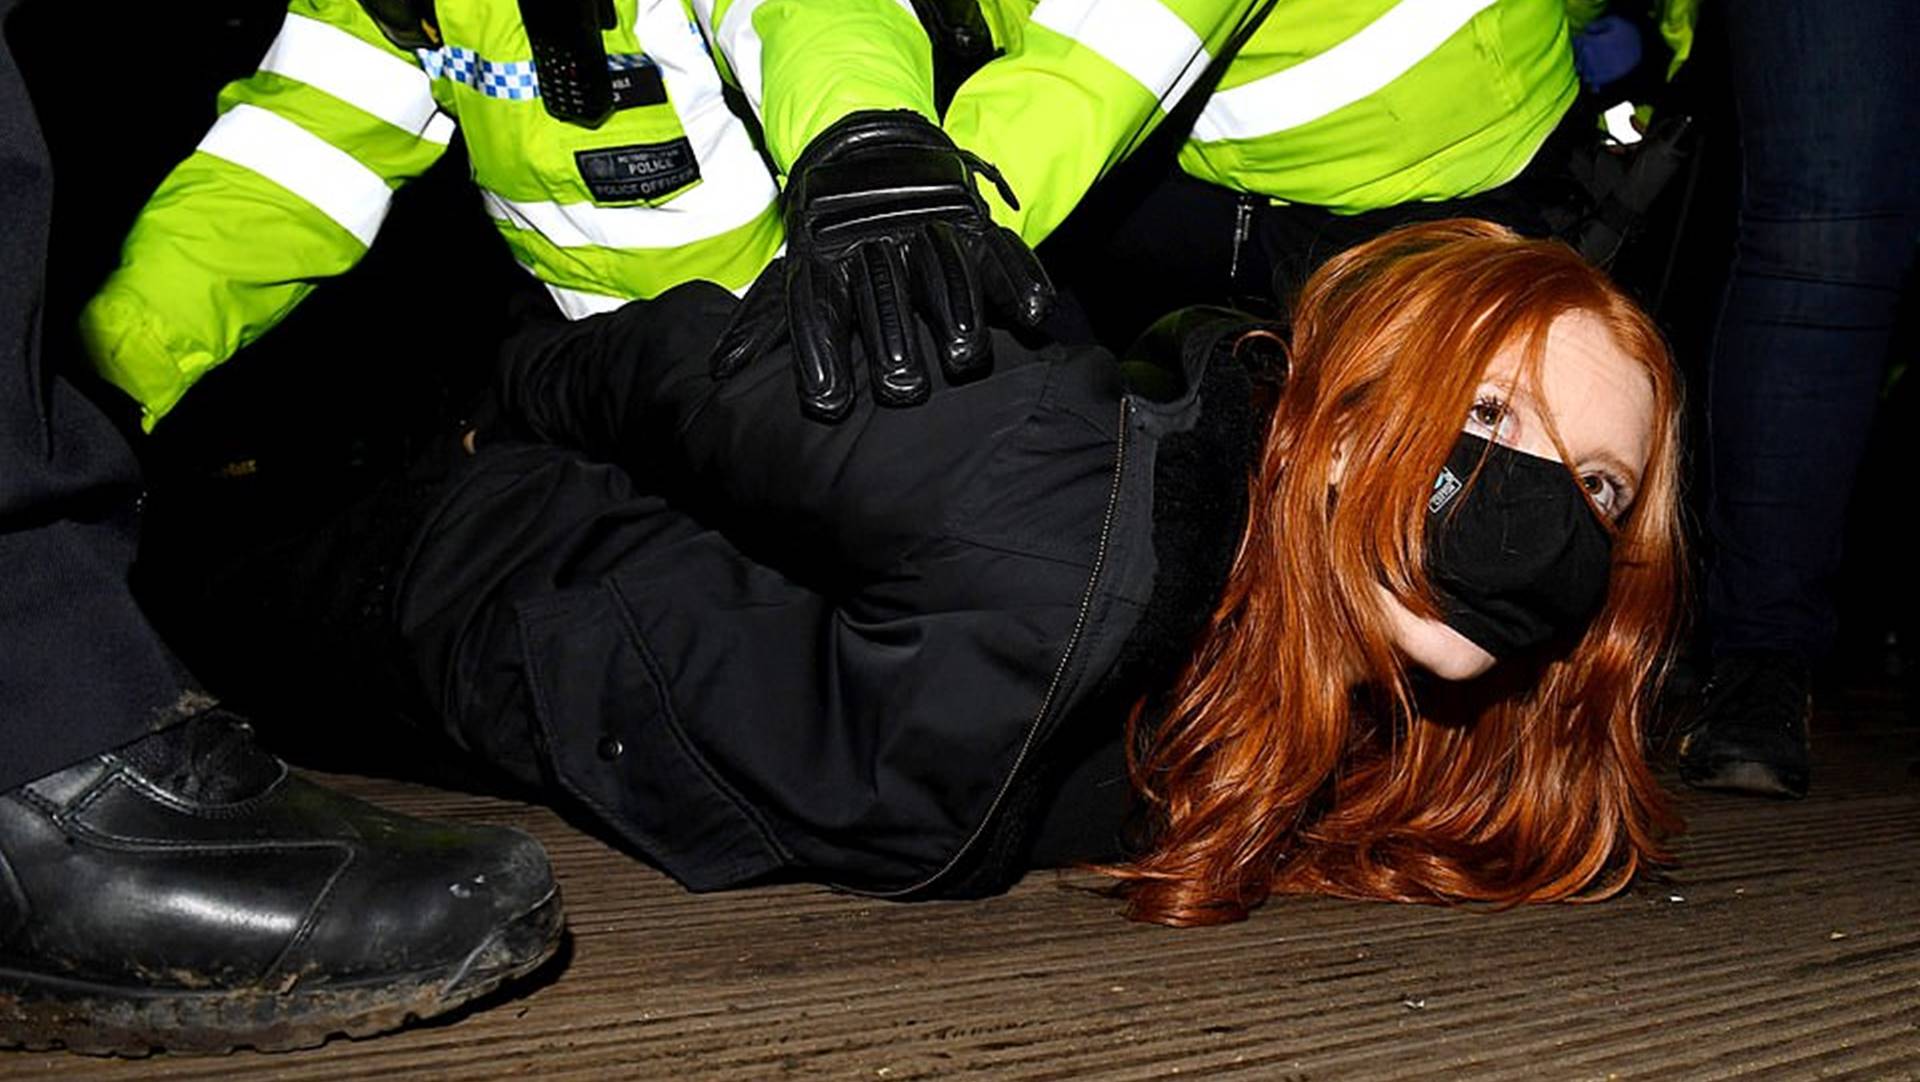 IN PHOTOS: UK police crackdown on vigil for Sarah Everard